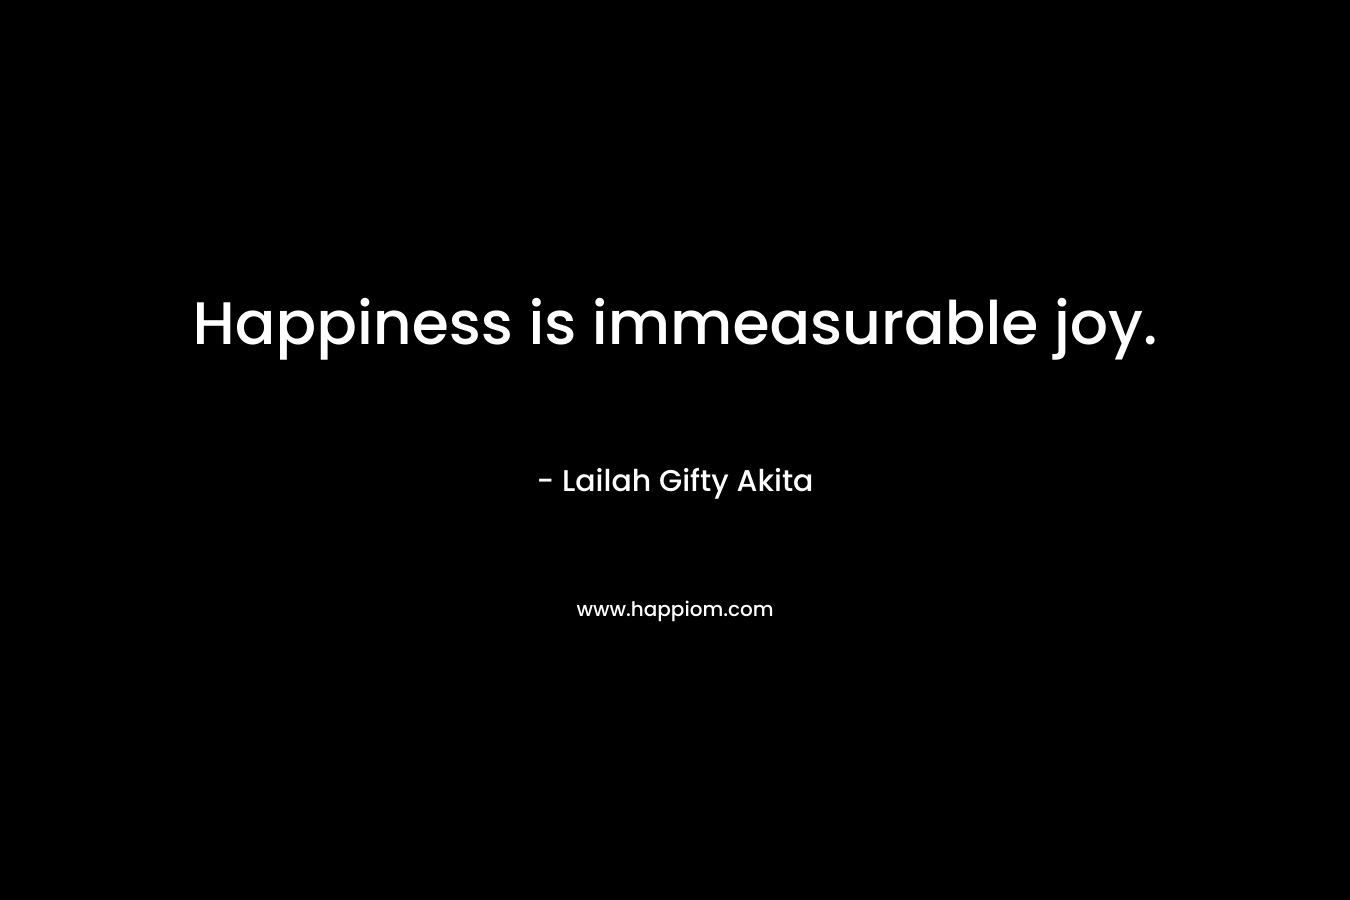 Happiness is immeasurable joy.